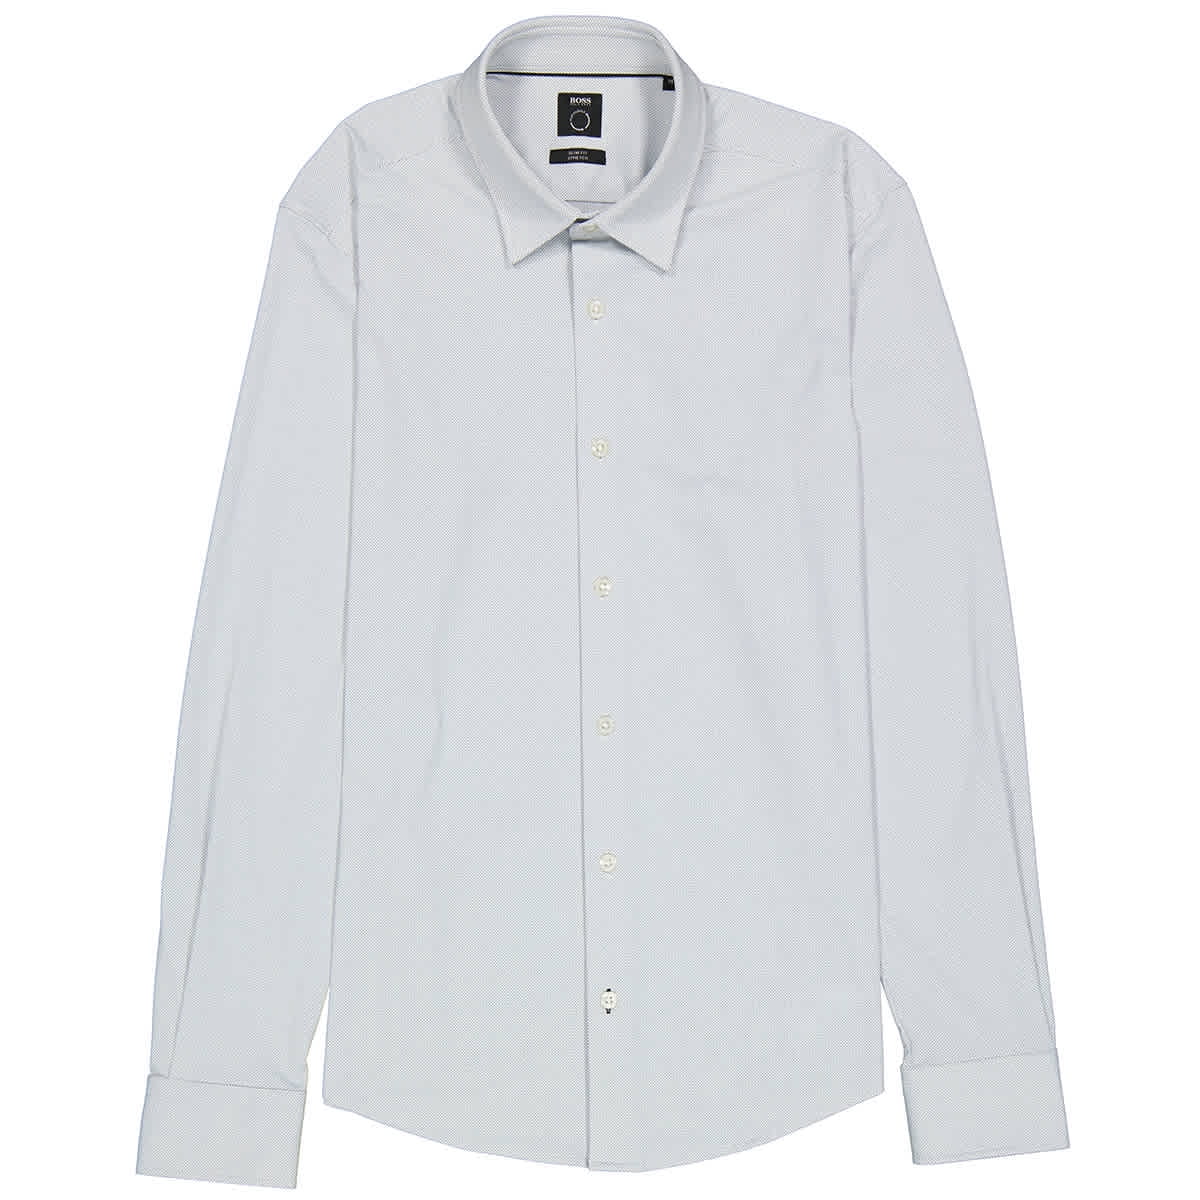 Hugo Boss Men's White Ronni Slim-fit Shirt, Size Medium - Walmart.com